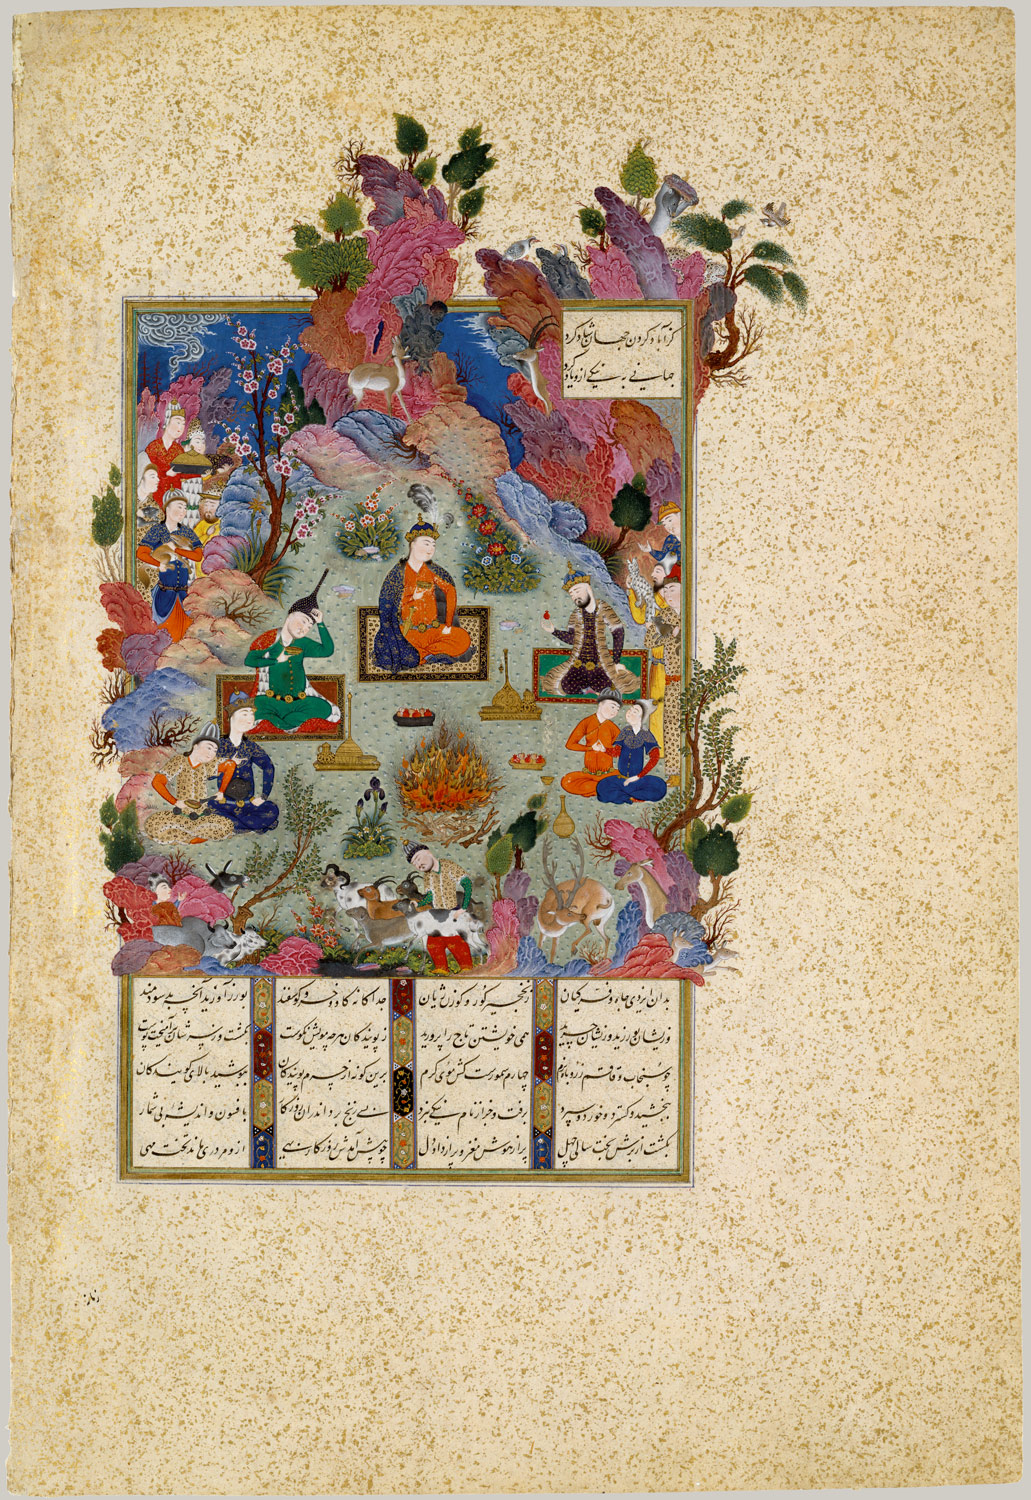 The Feast of Sada, Folio 22v from the Shahnama (Book of Kings) of Shah Tahmasp